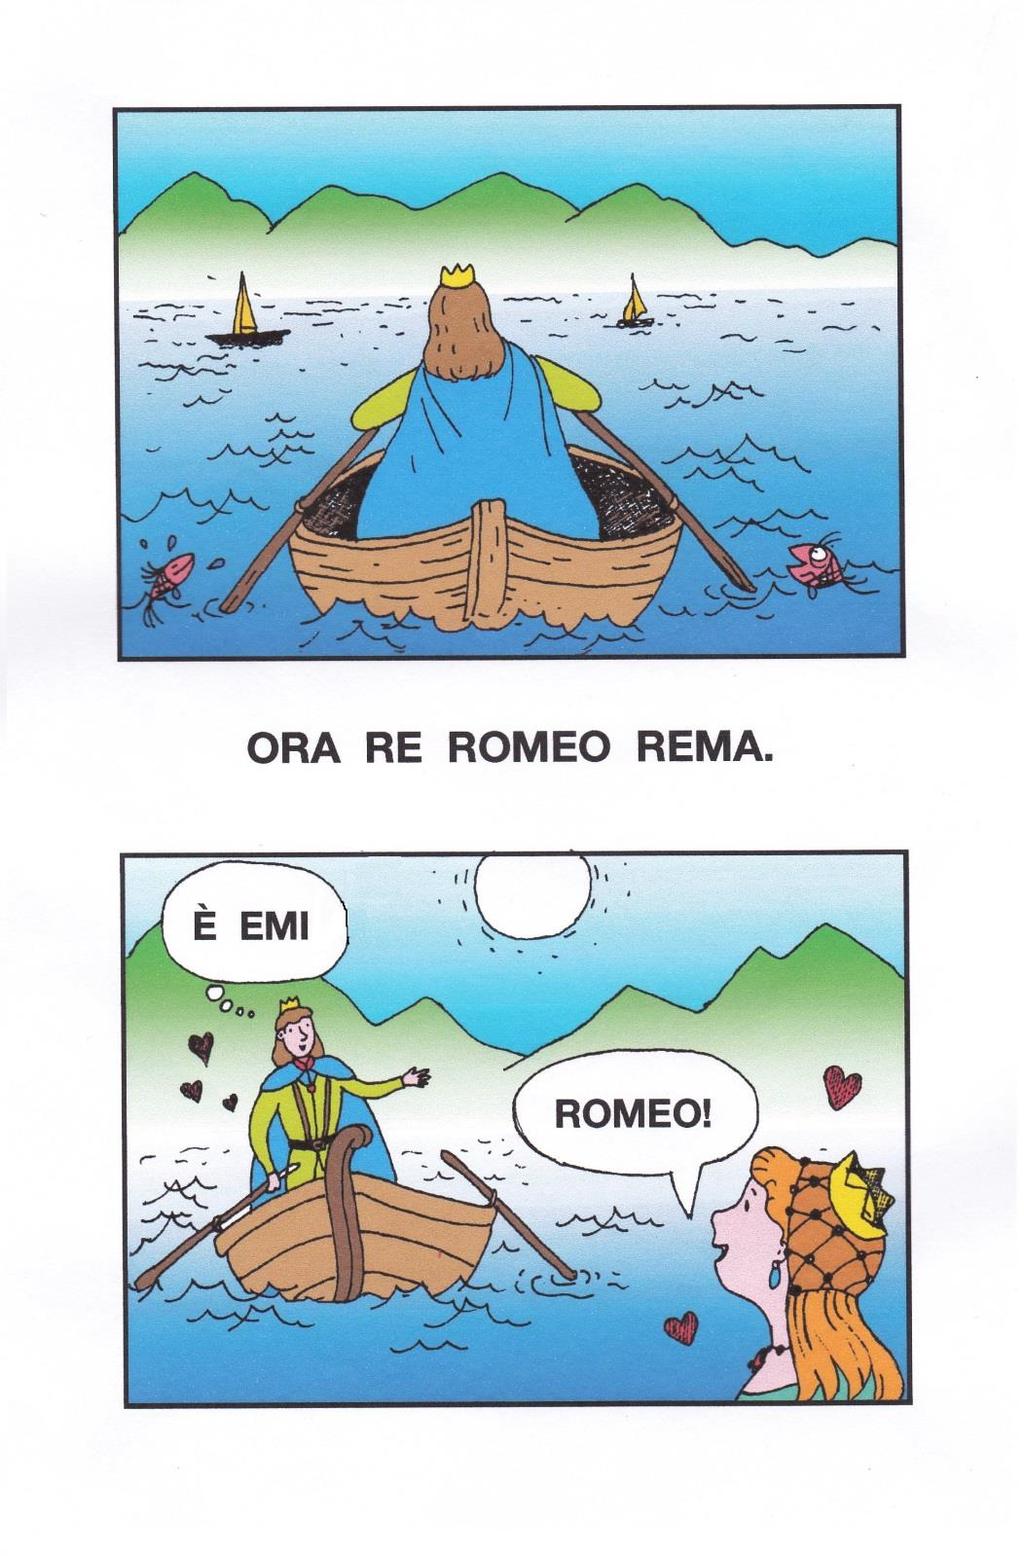 ROMEO REMA.